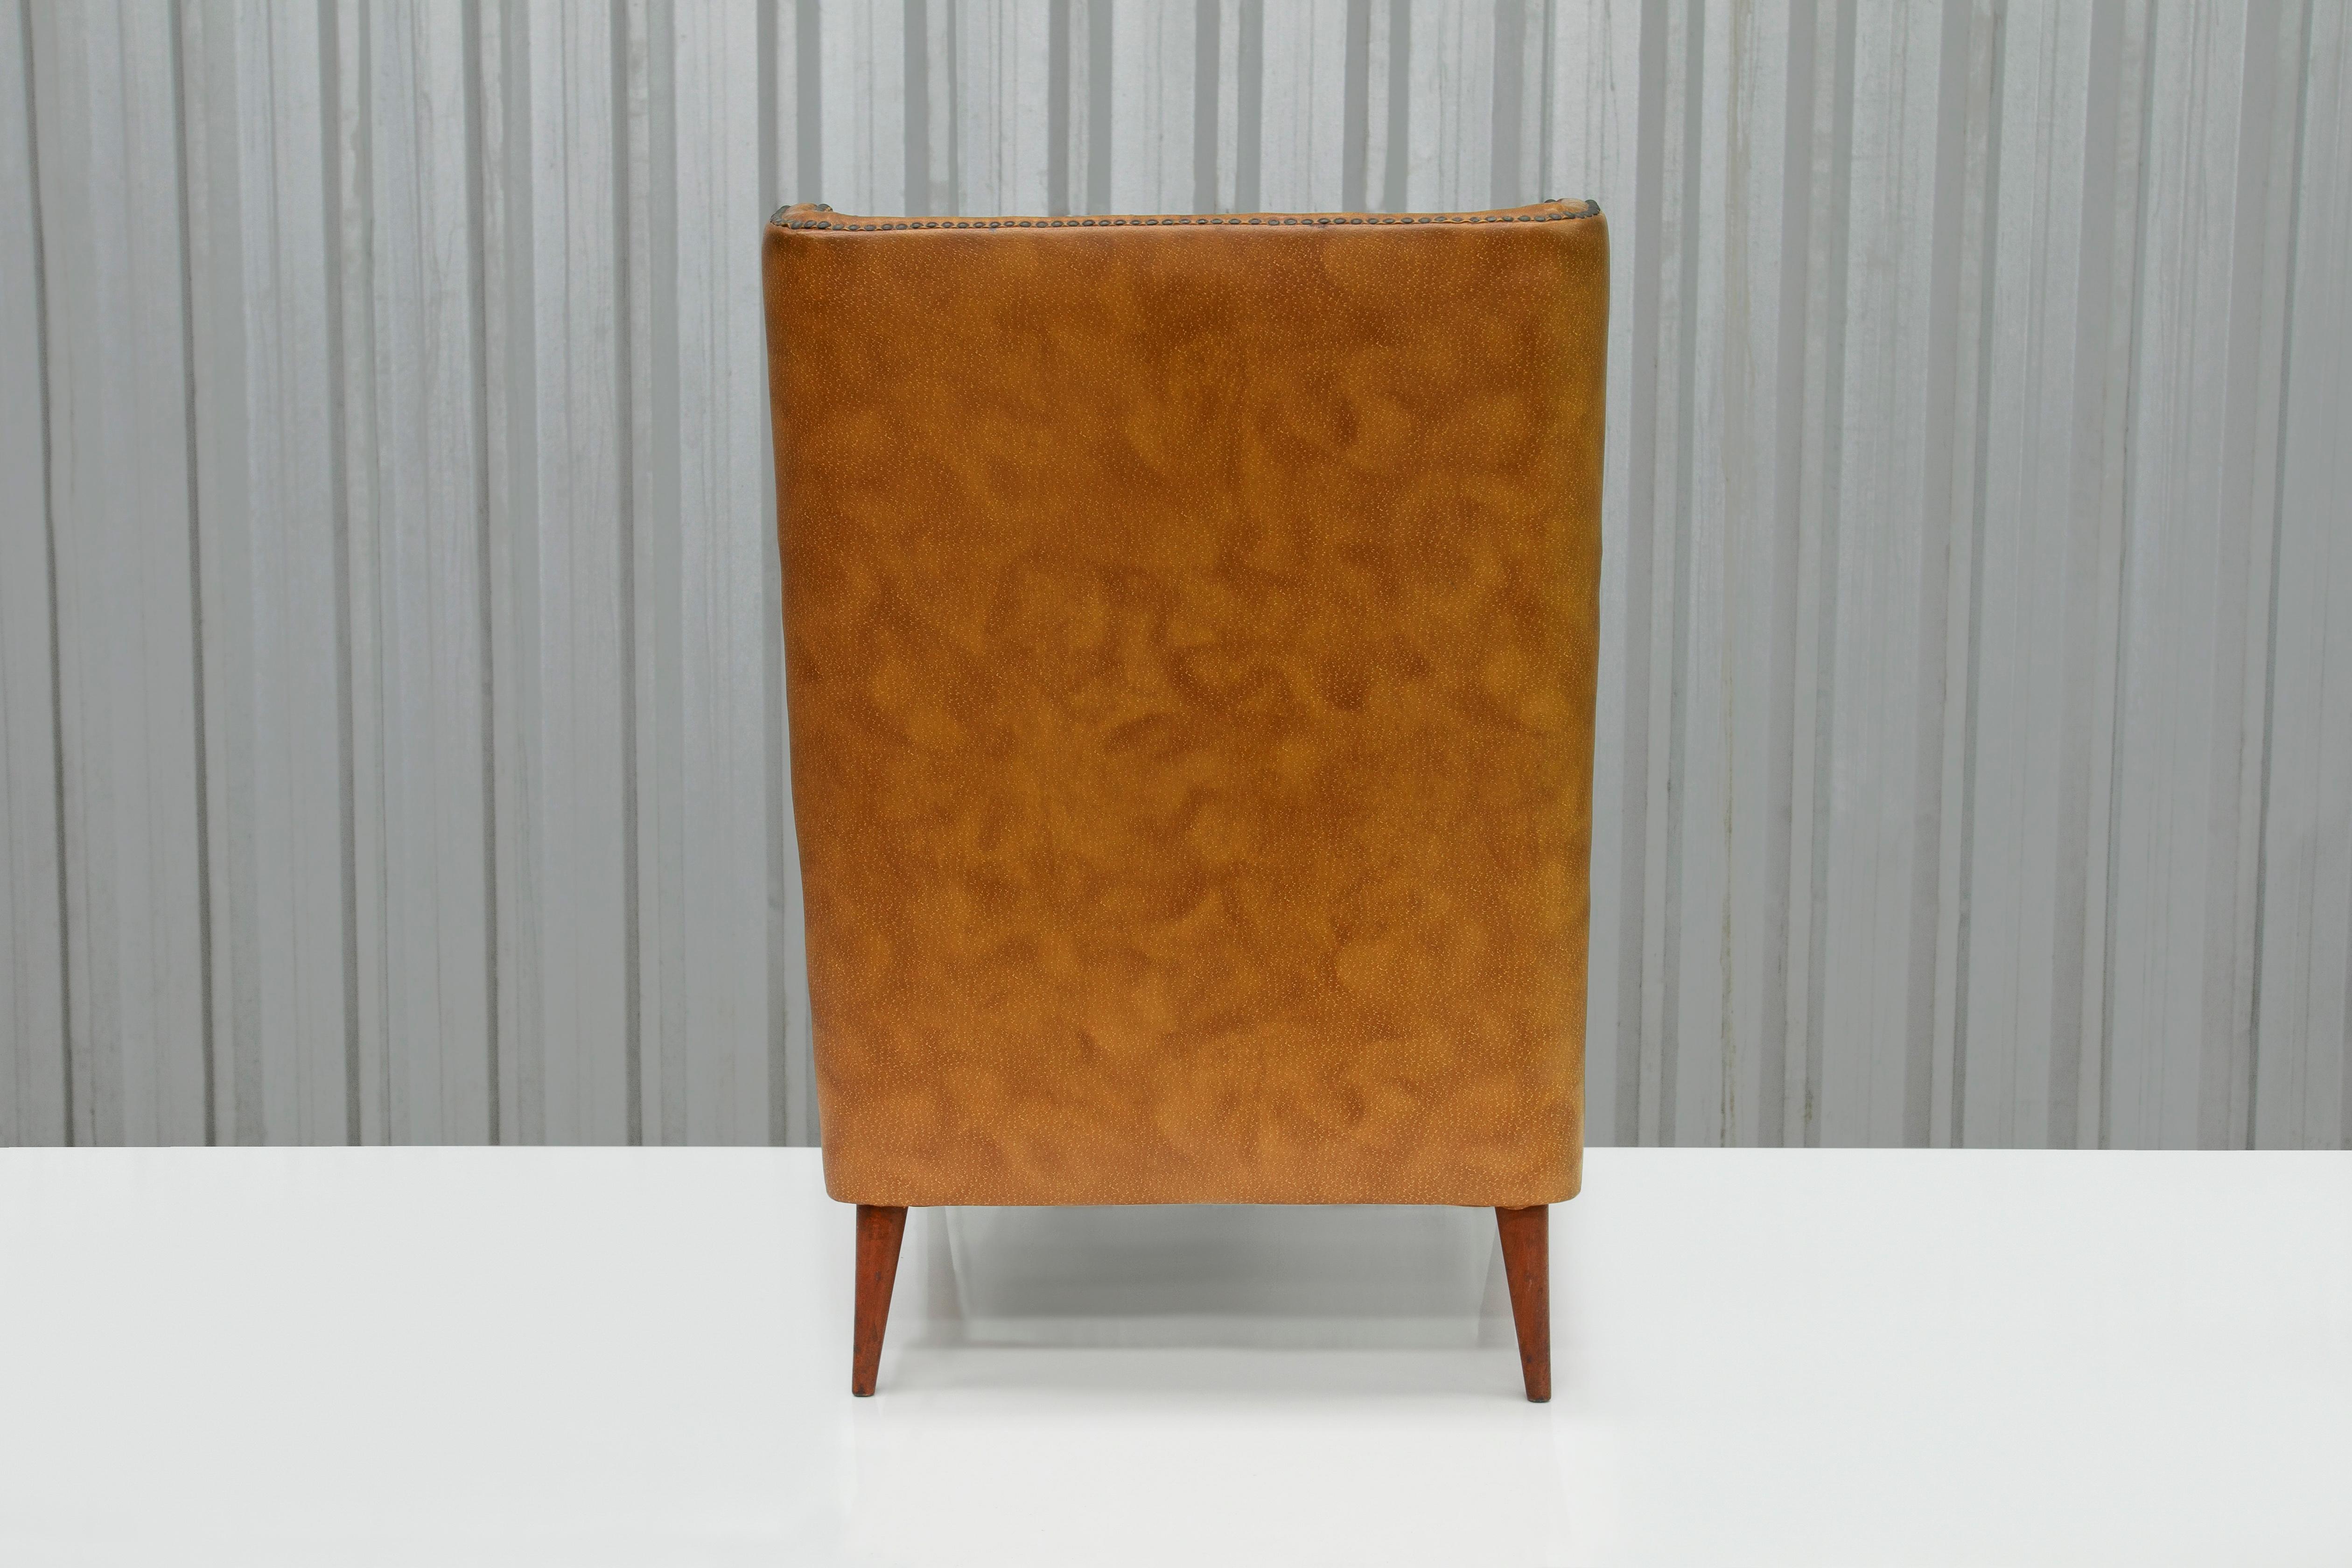 Brasilianischer moderner Sessel aus Hartholz, braunes Leder, G. Scapinelli, 1950er Jahre (20. Jahrhundert) im Angebot